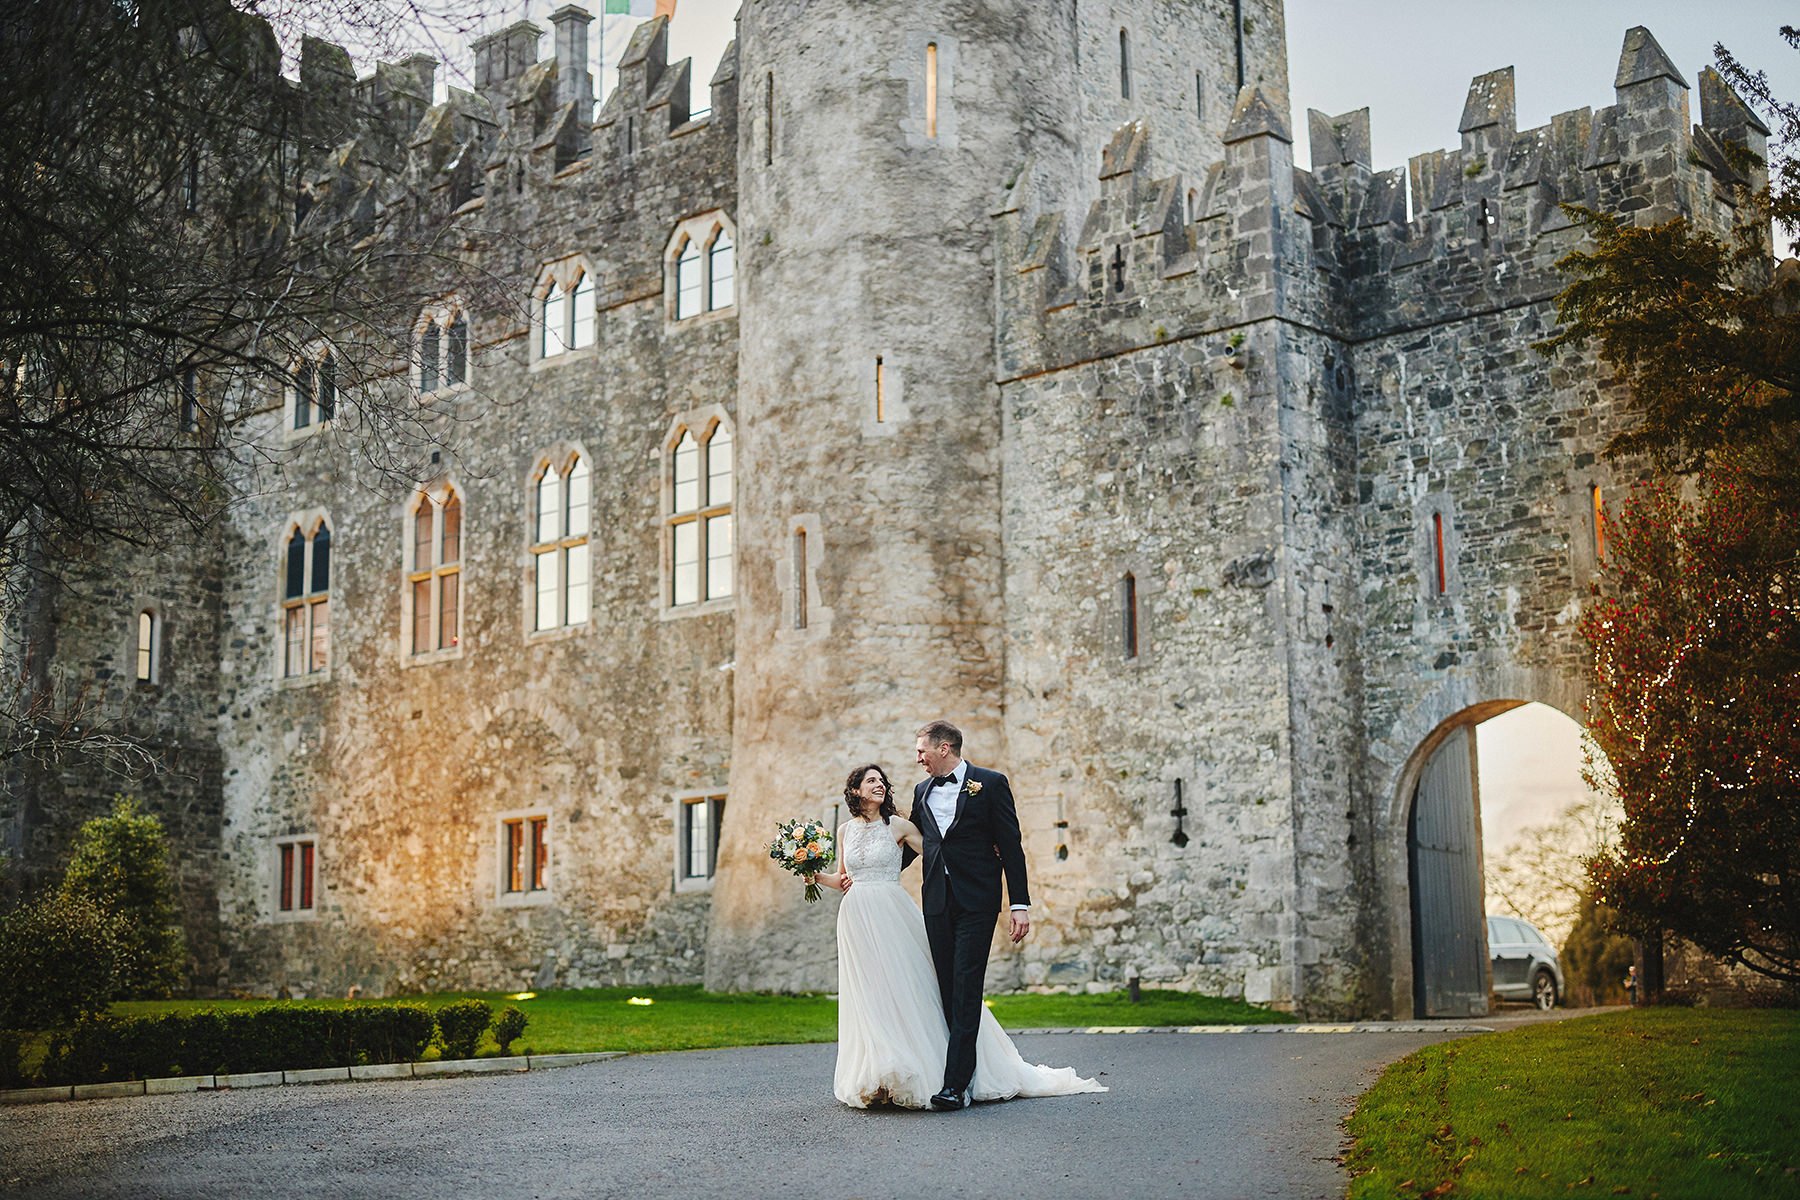 Kilkea Castle – The perfect Fairytale Wedding Venue 17